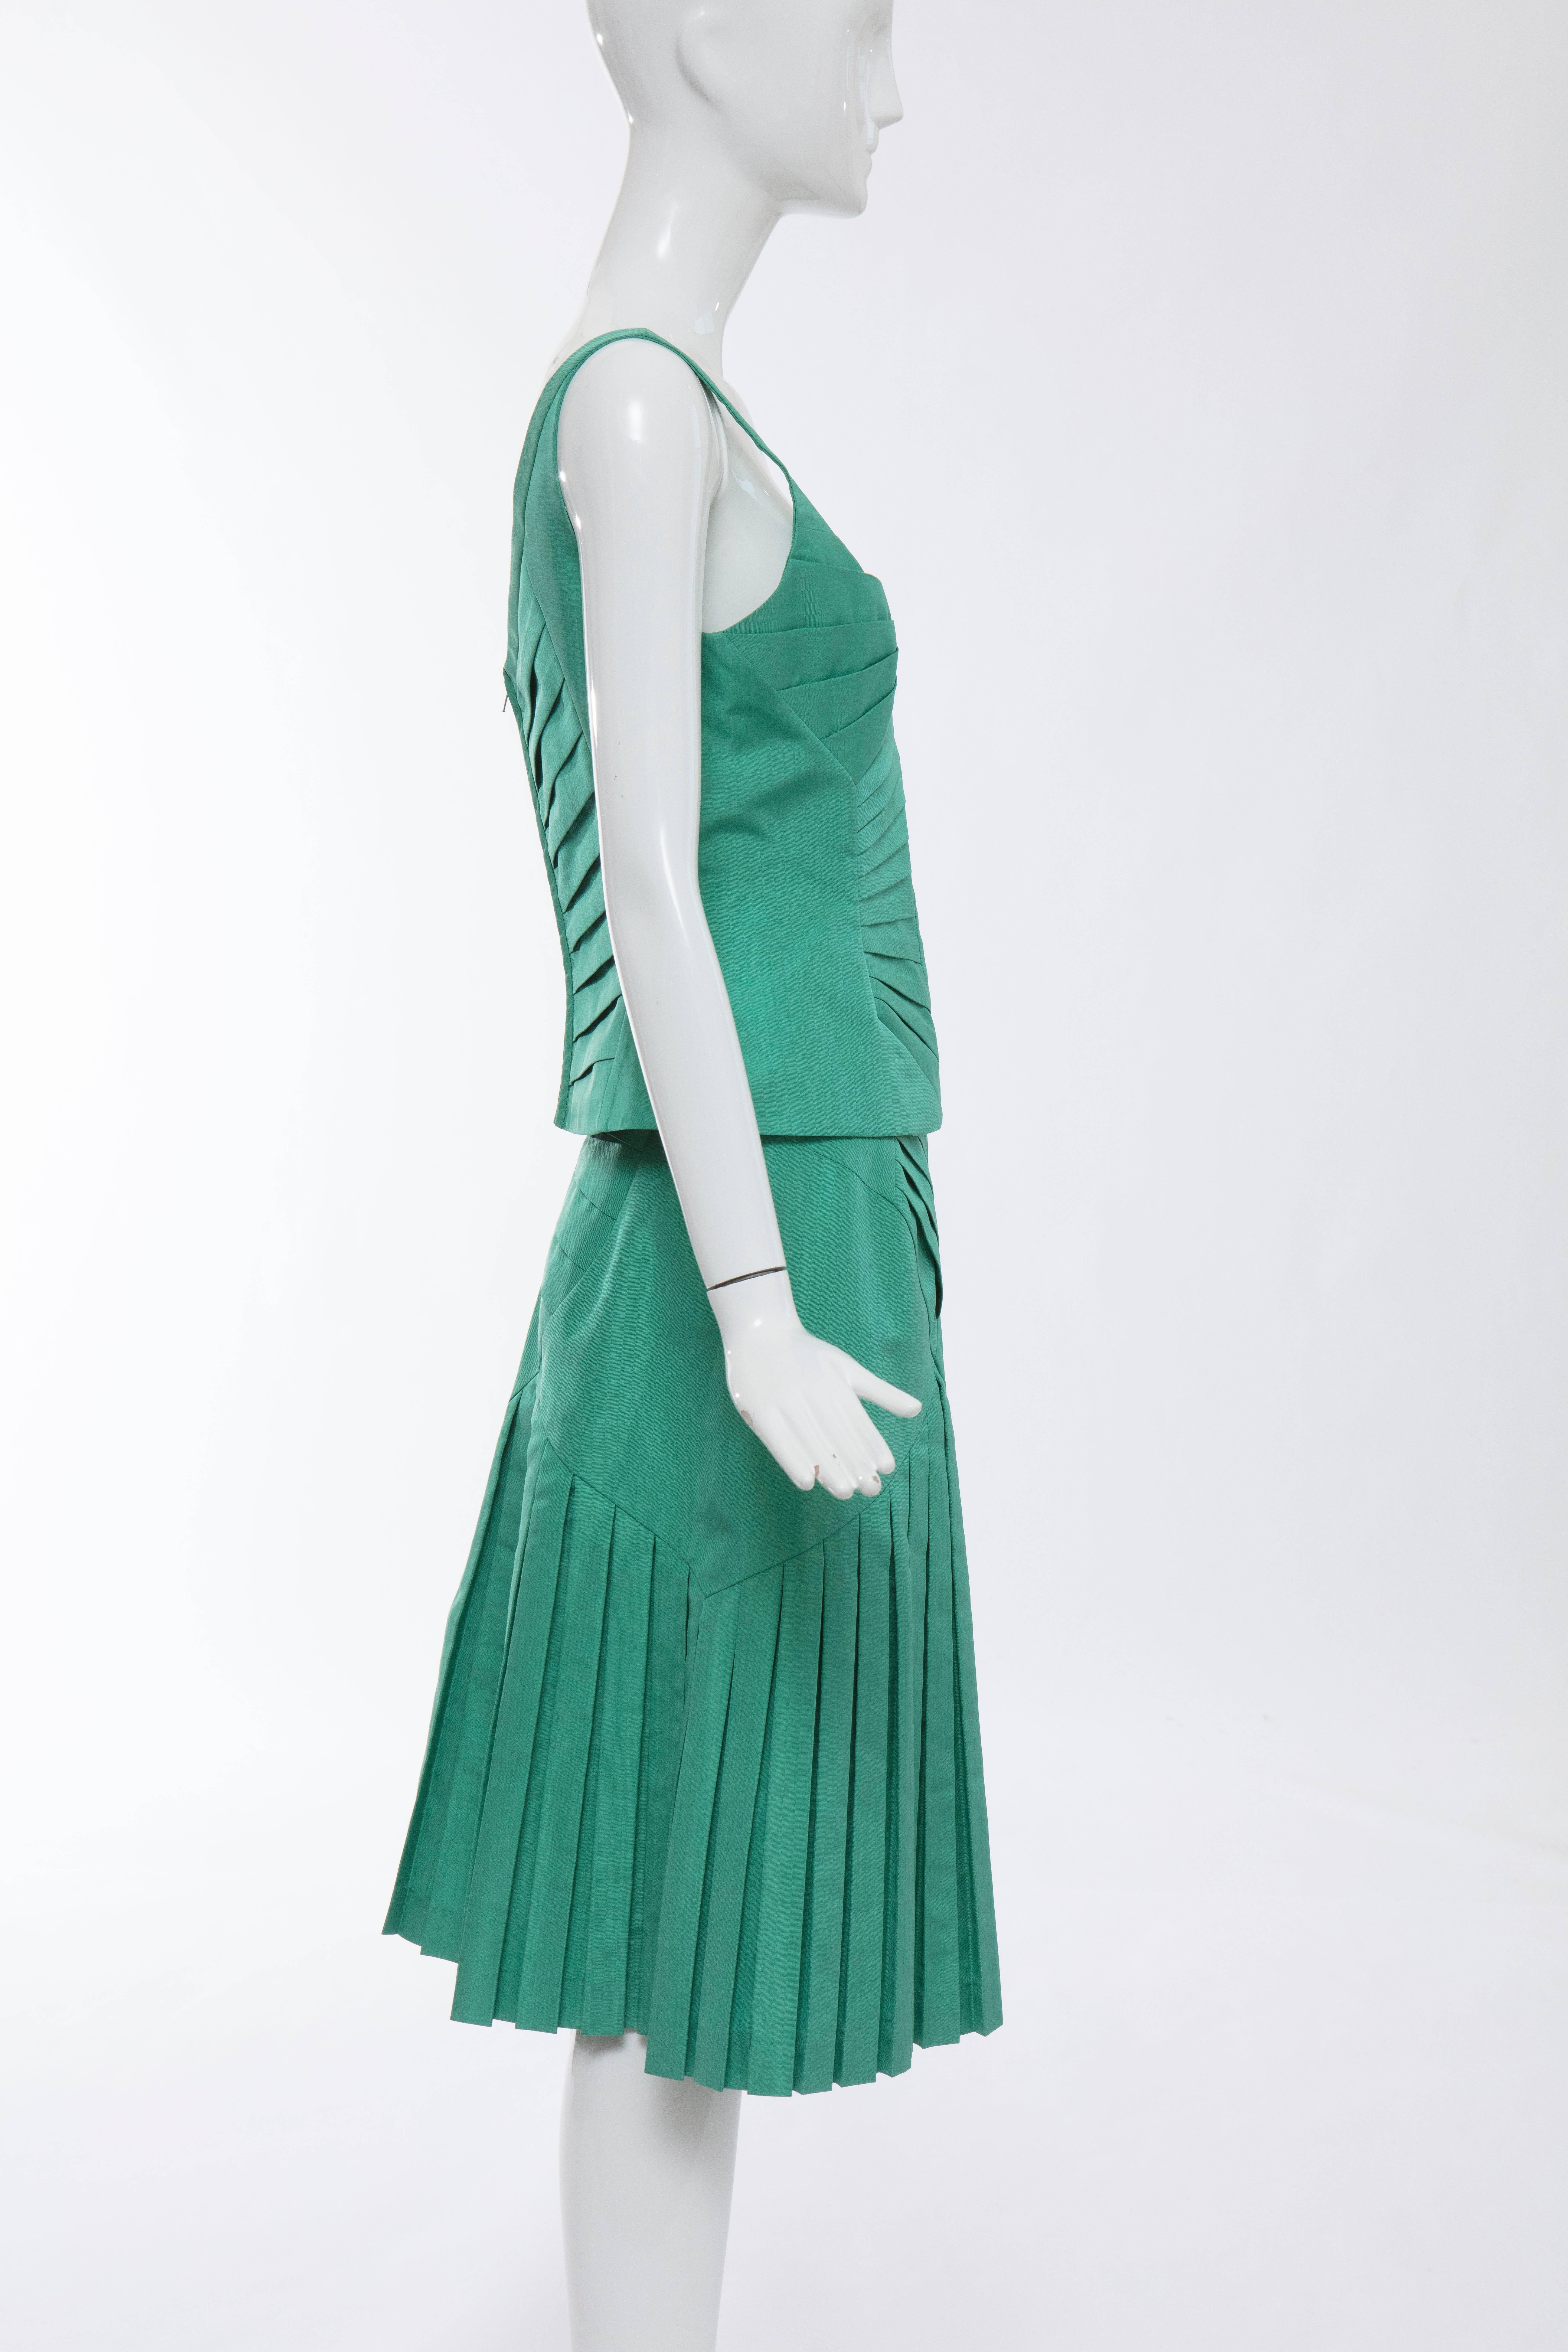 Zac Posen Green Silk Moiré Pleated Skirt Suit, Fall 2005 For Sale 3